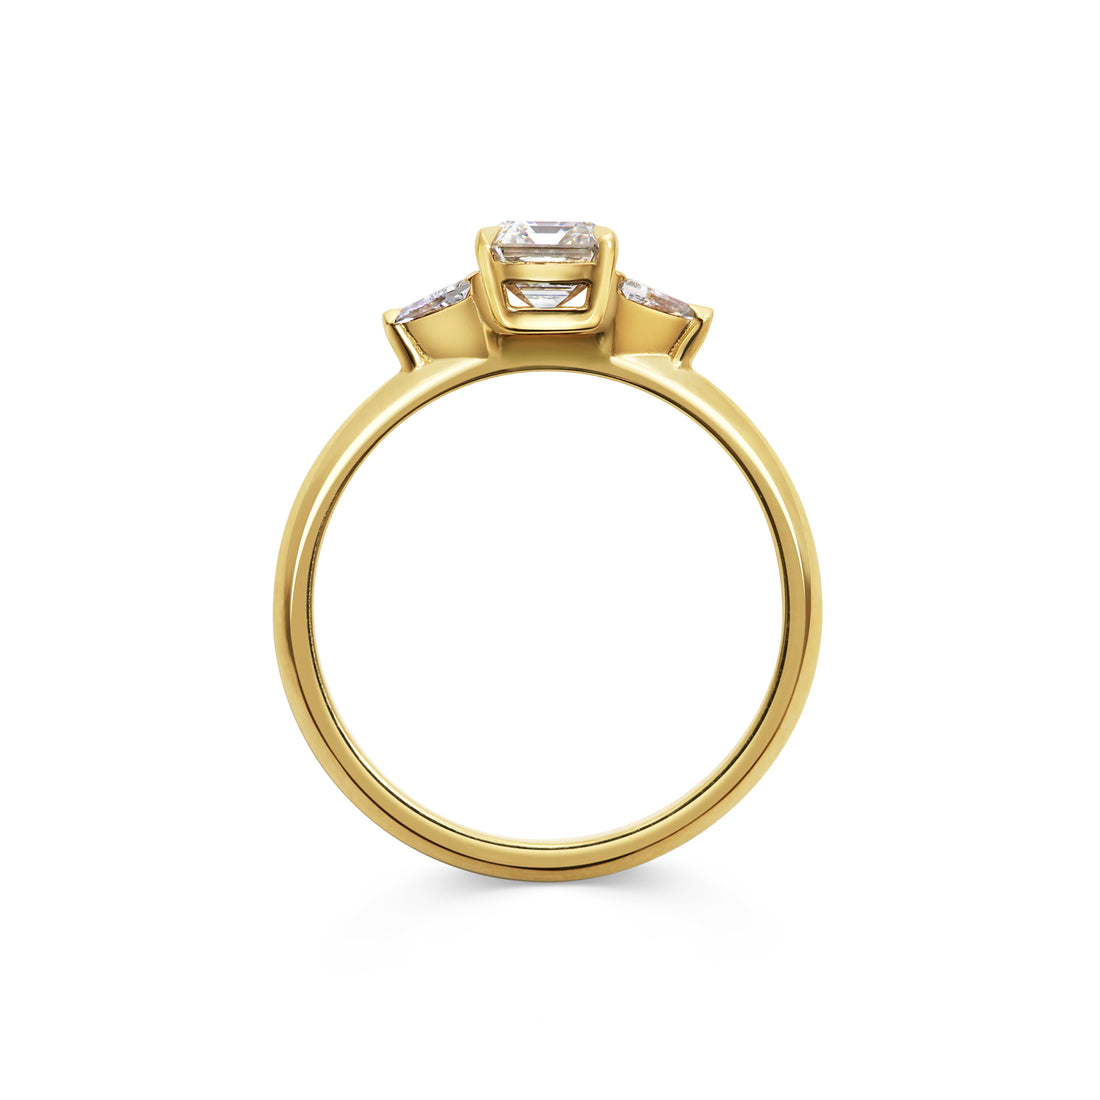  Crux Emerald Cut Diamond Ring by Rachel Boston | The Cut London